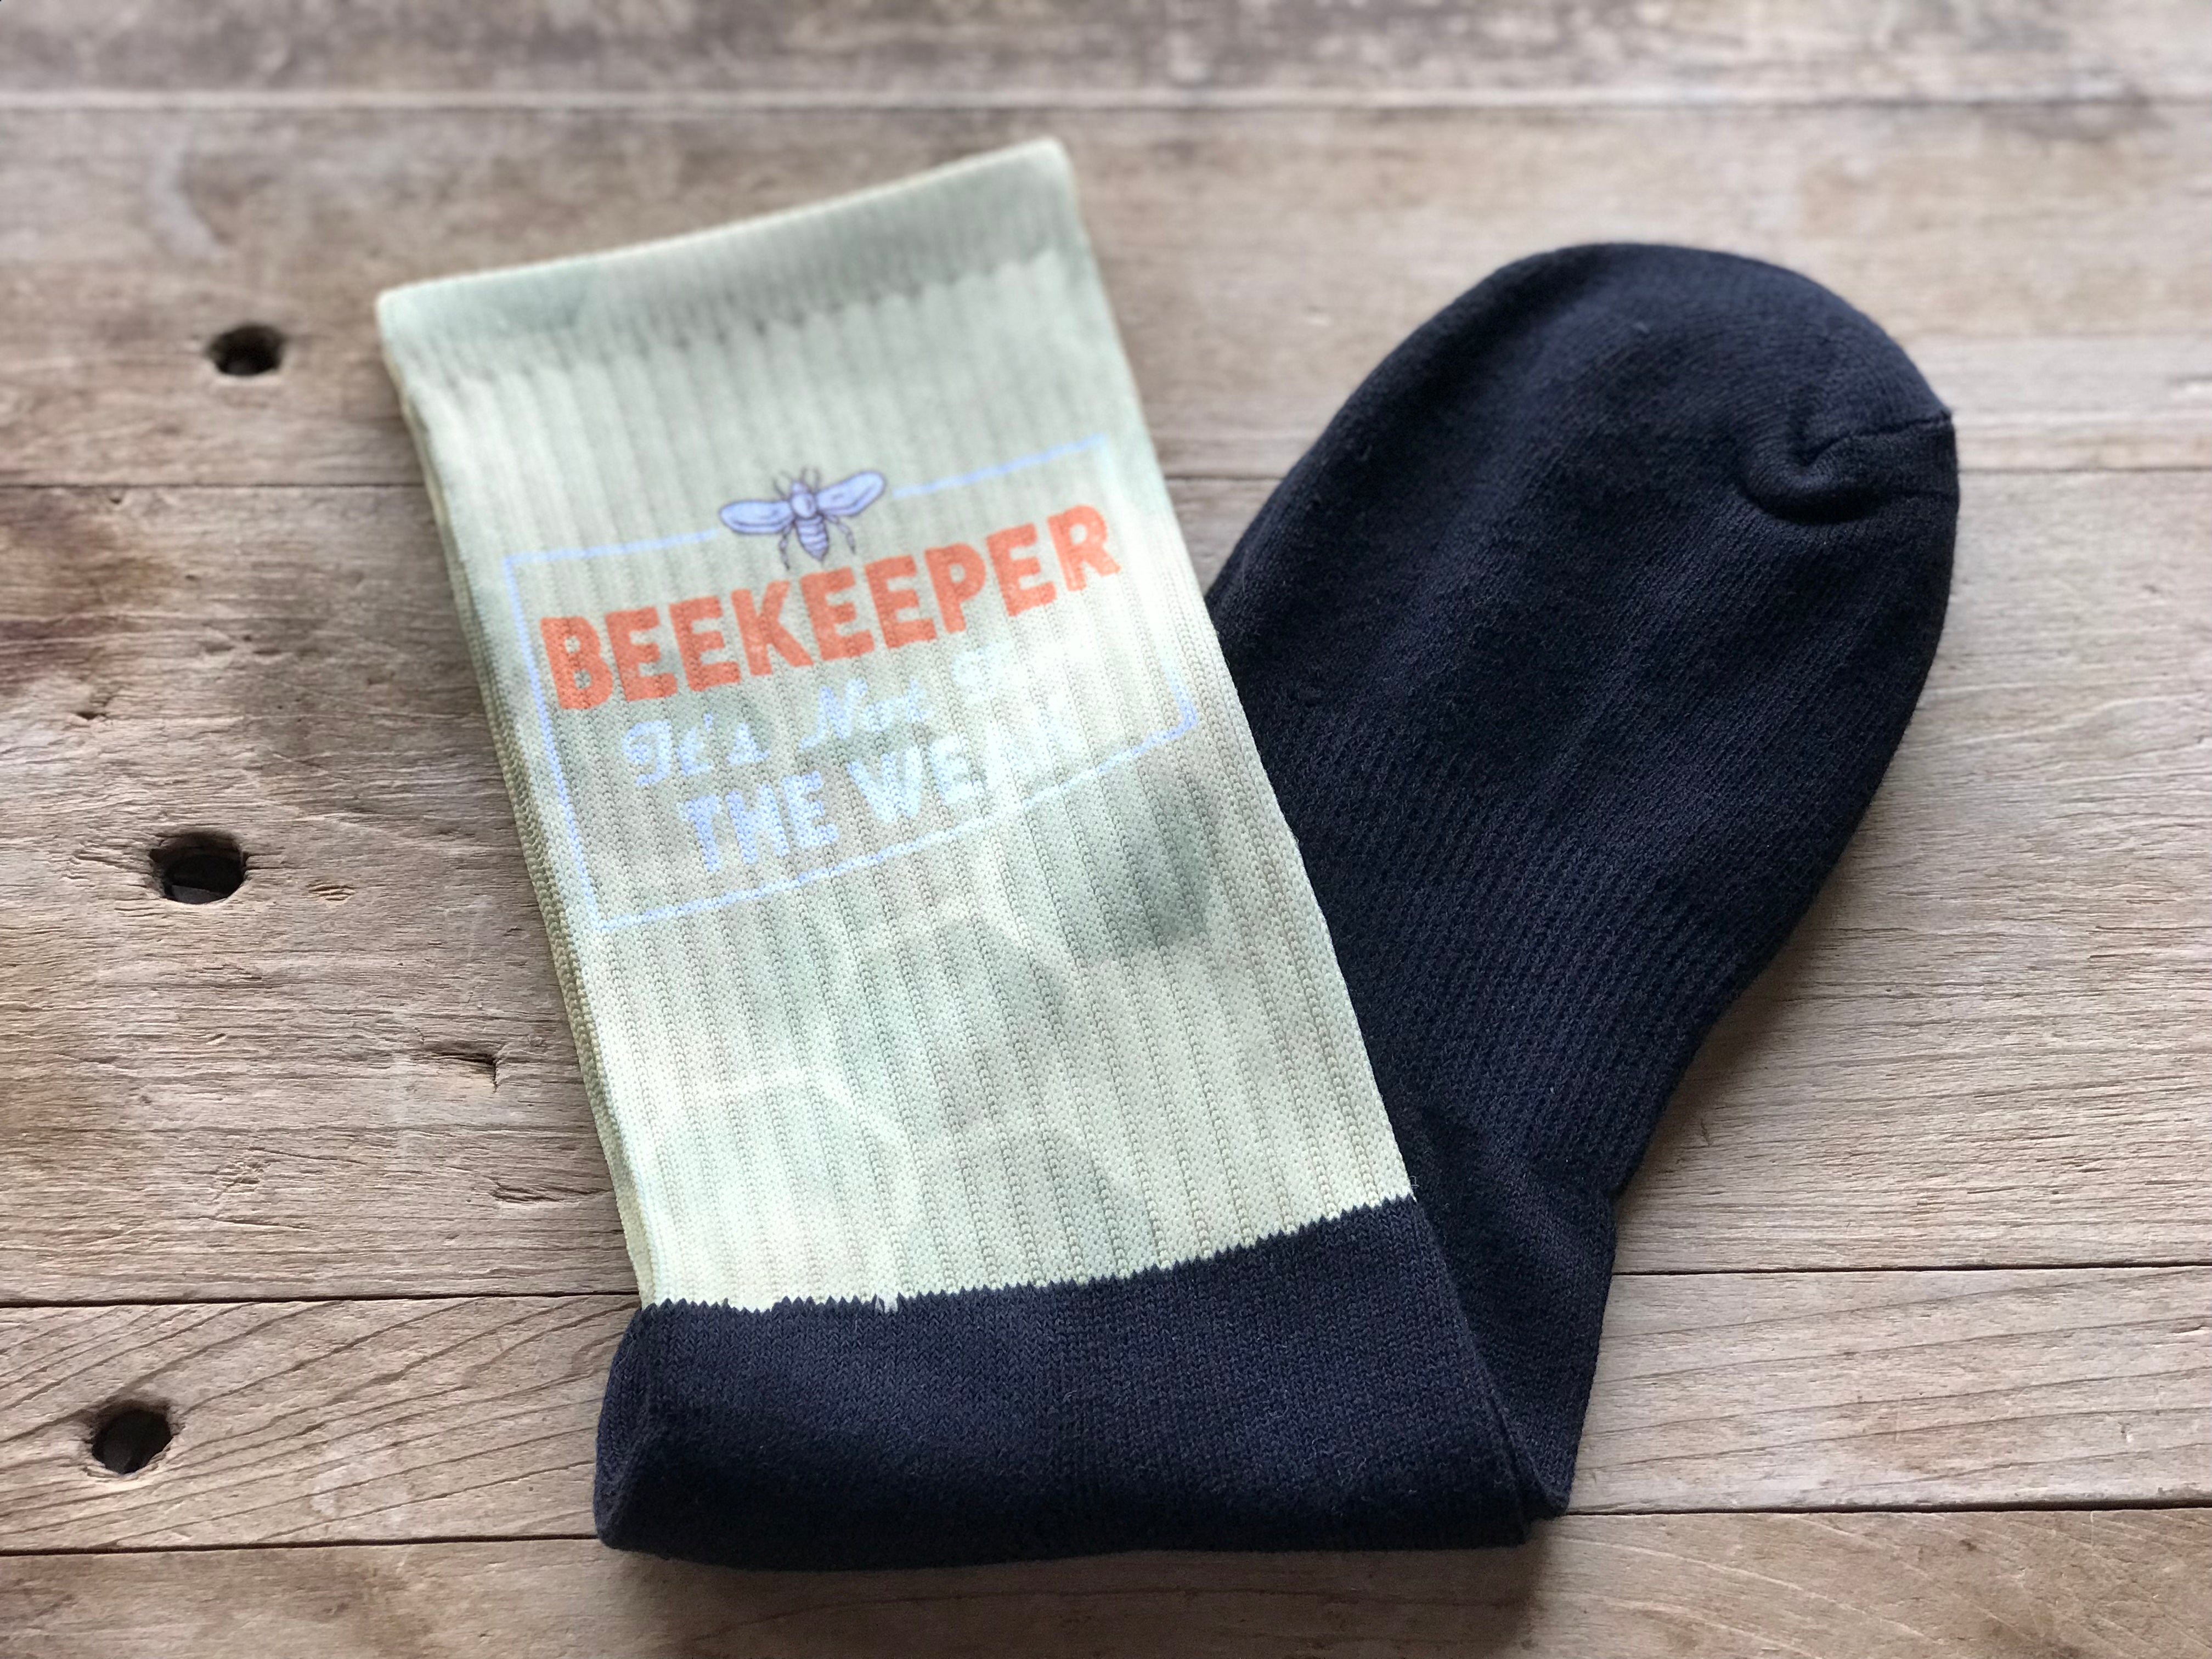 Beekeeper "It's Not for the Weak"  Crew Socks